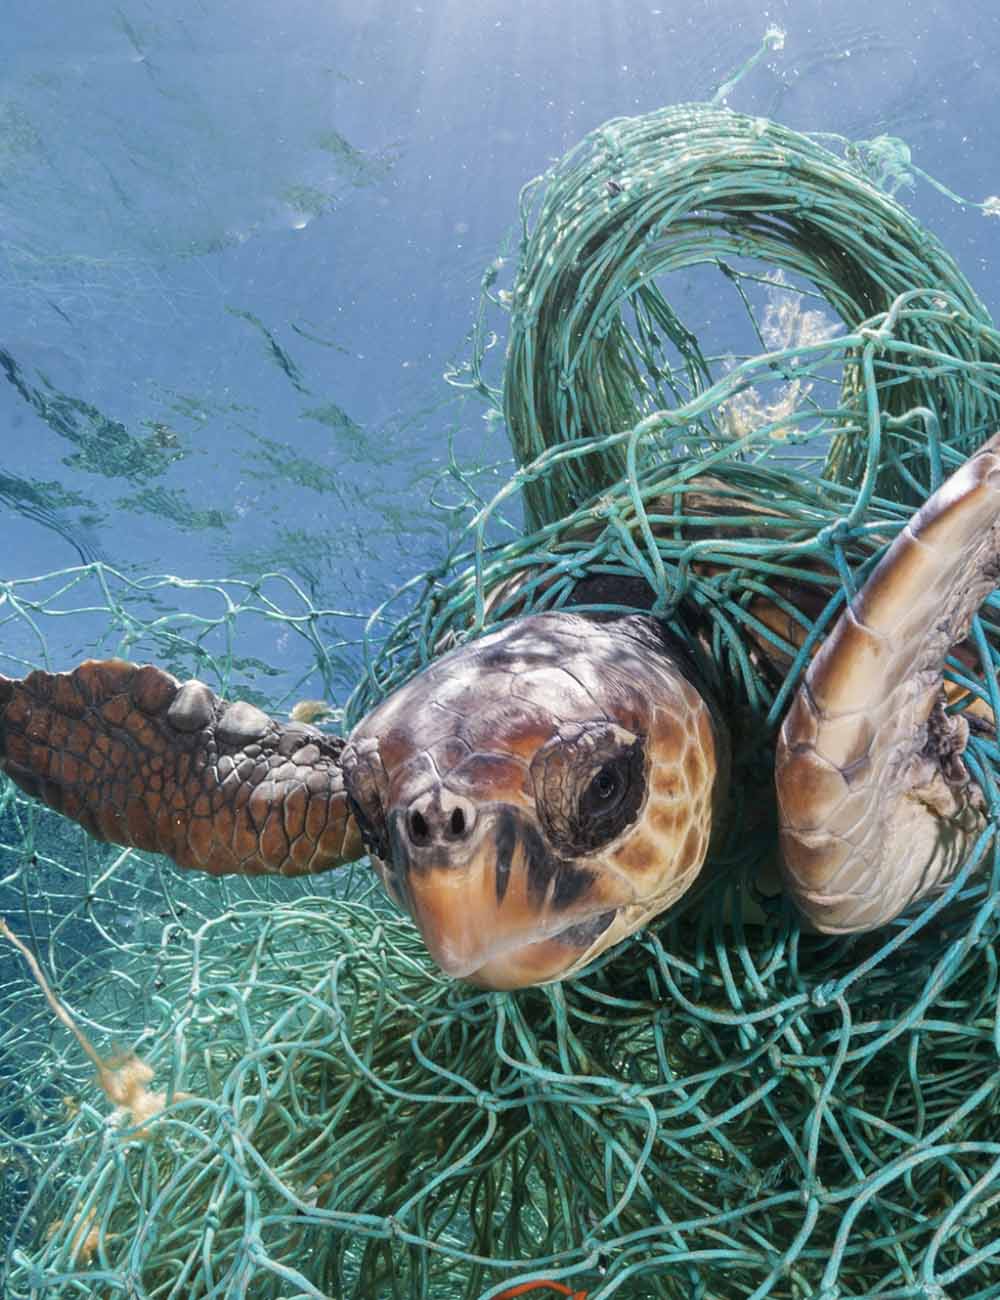 Tortoise caught in fish nets